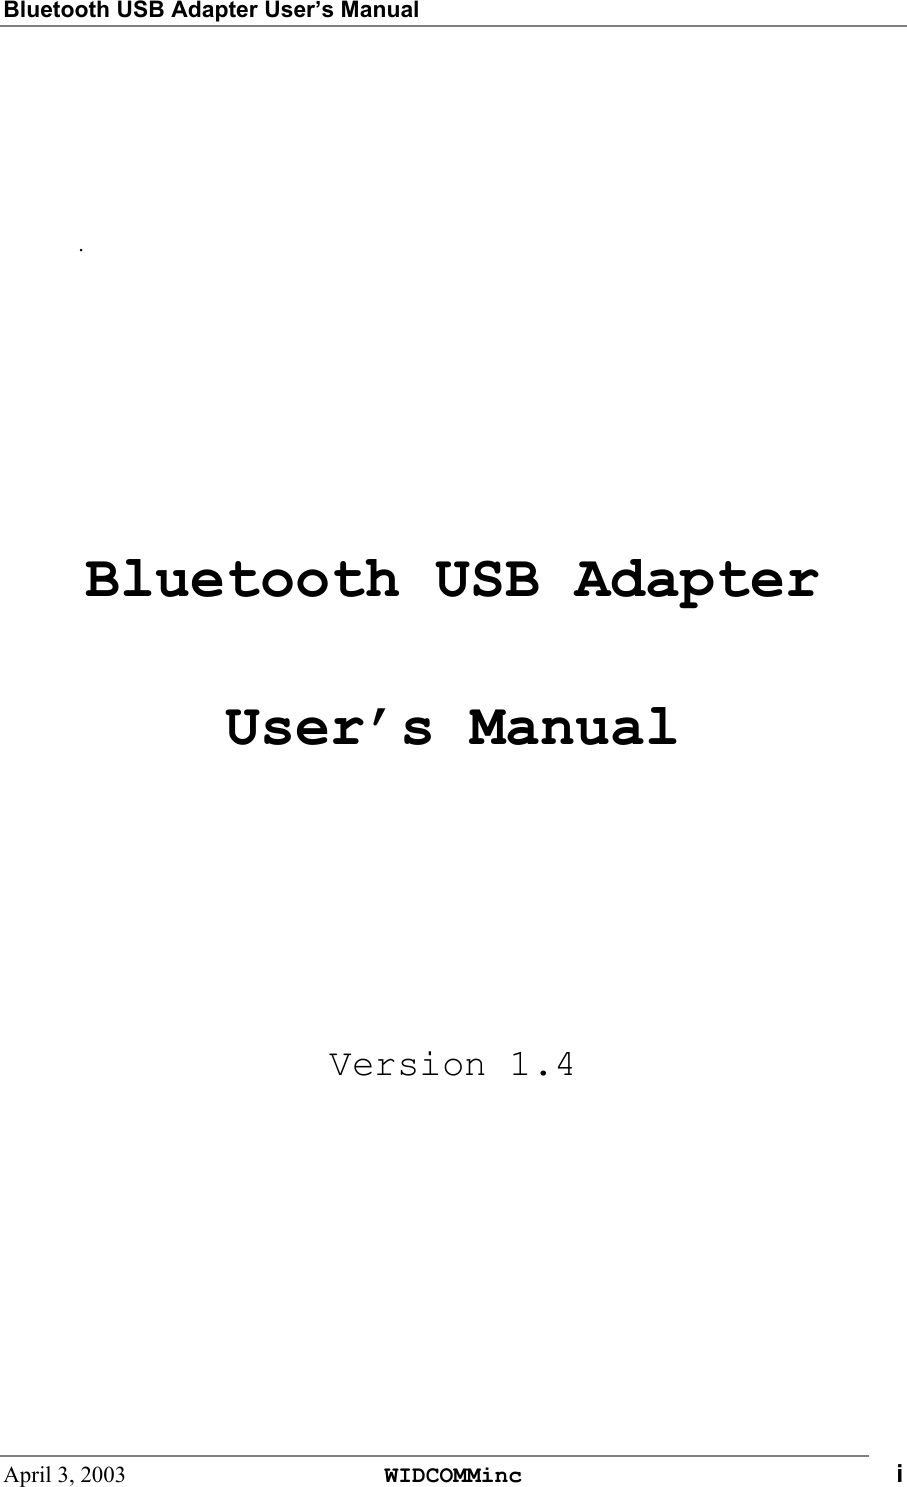 Bluetooth USB Adapter User’s ManualApril 3, 2003 WIDCOMMinc i.Bluetooth USB AdapterUser’s ManualVersion 1.4